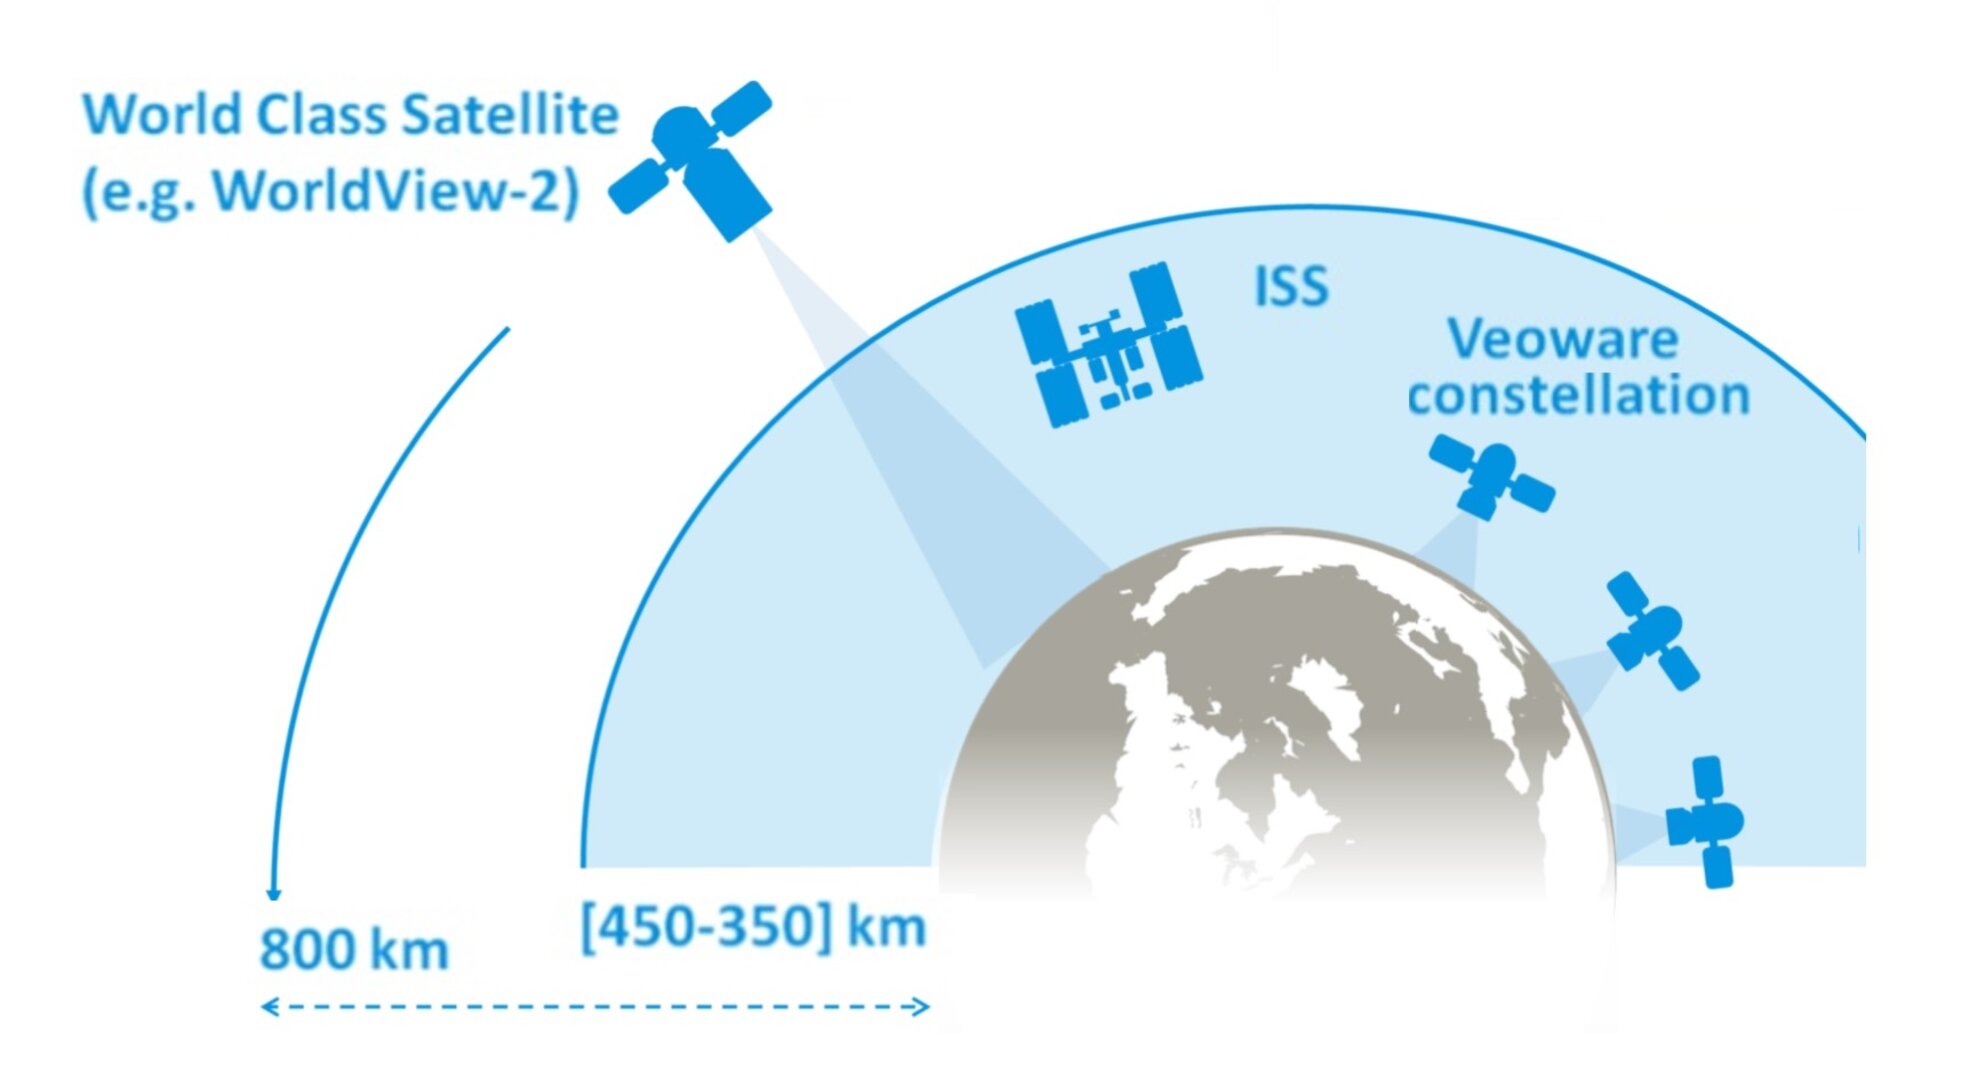 Veoware satellites are located below ISS